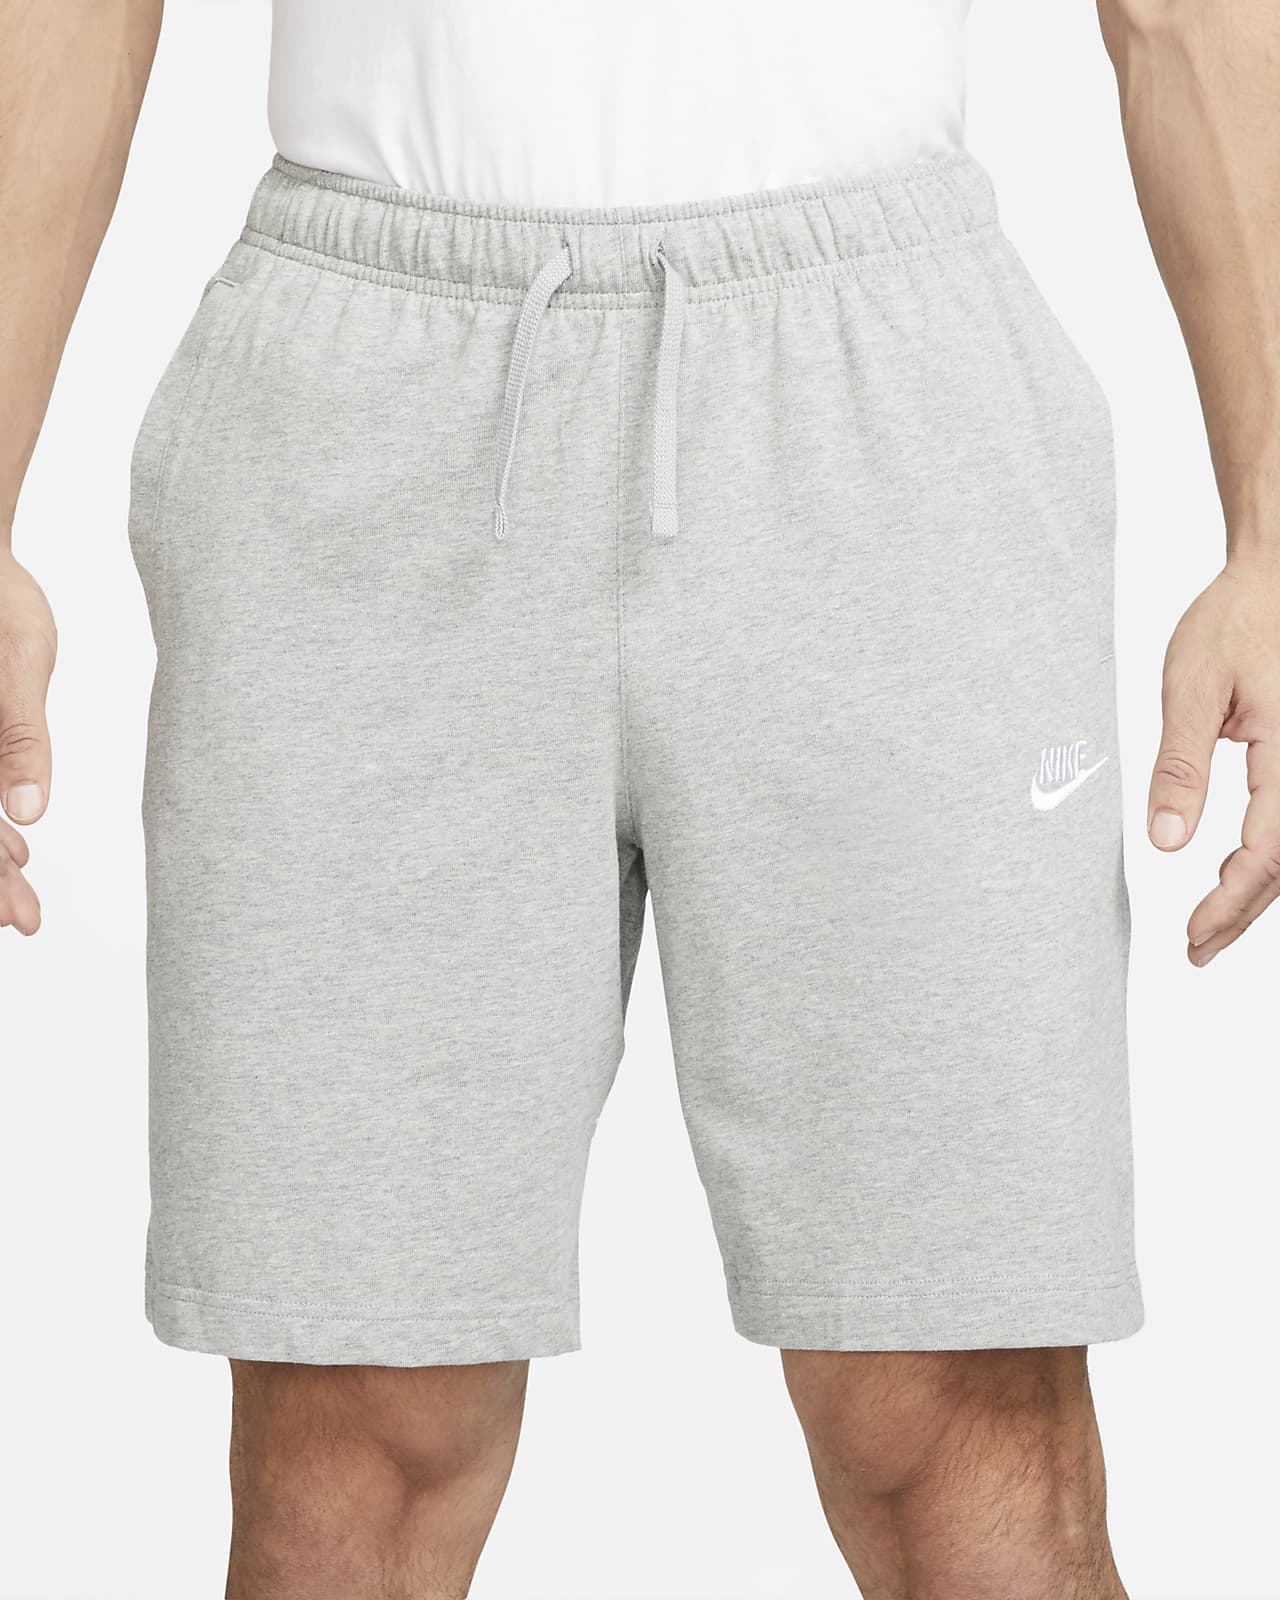 grey cloth nike shorts